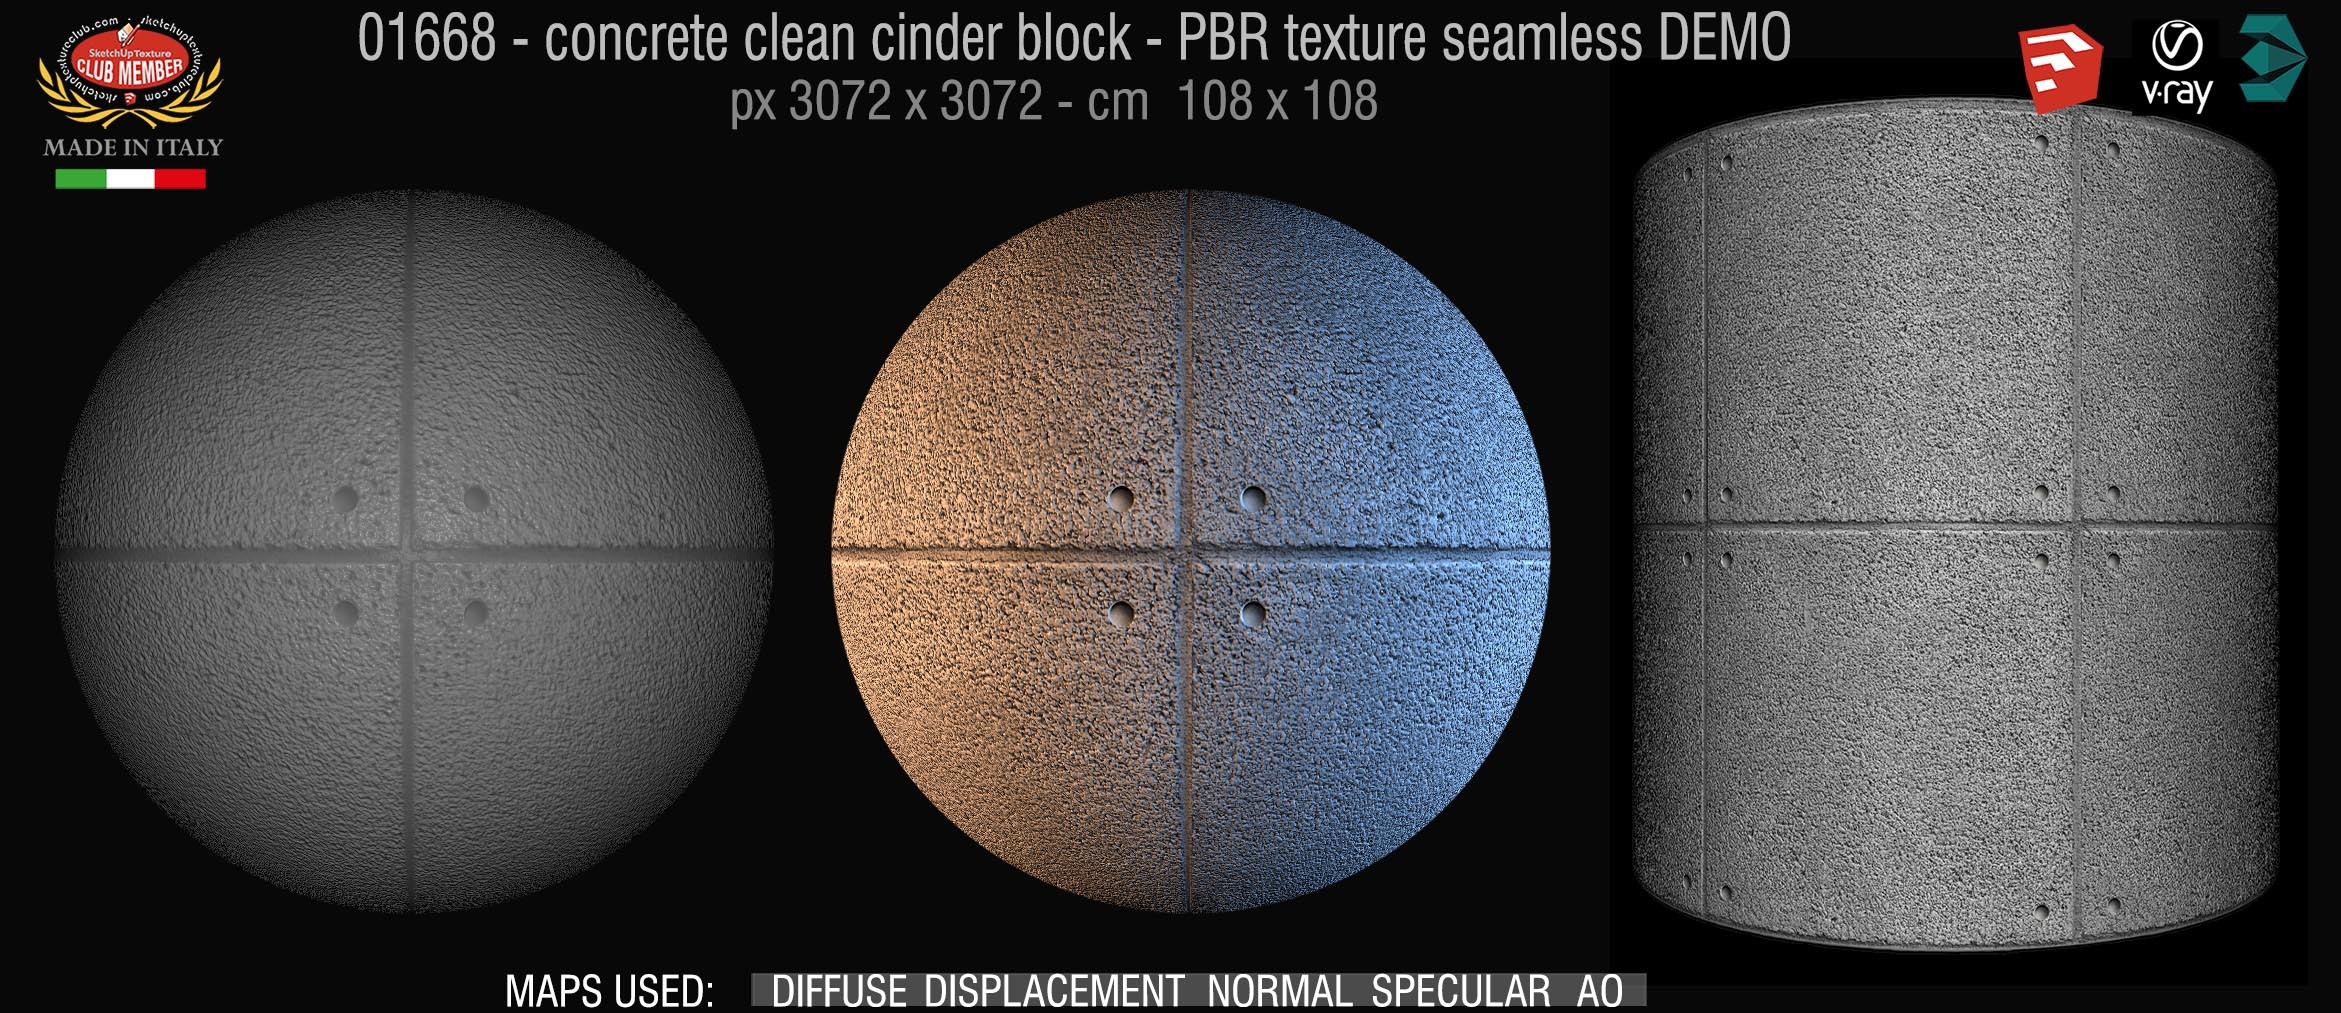 01668 concrete clean cinder block PBR texture seamless DEMO